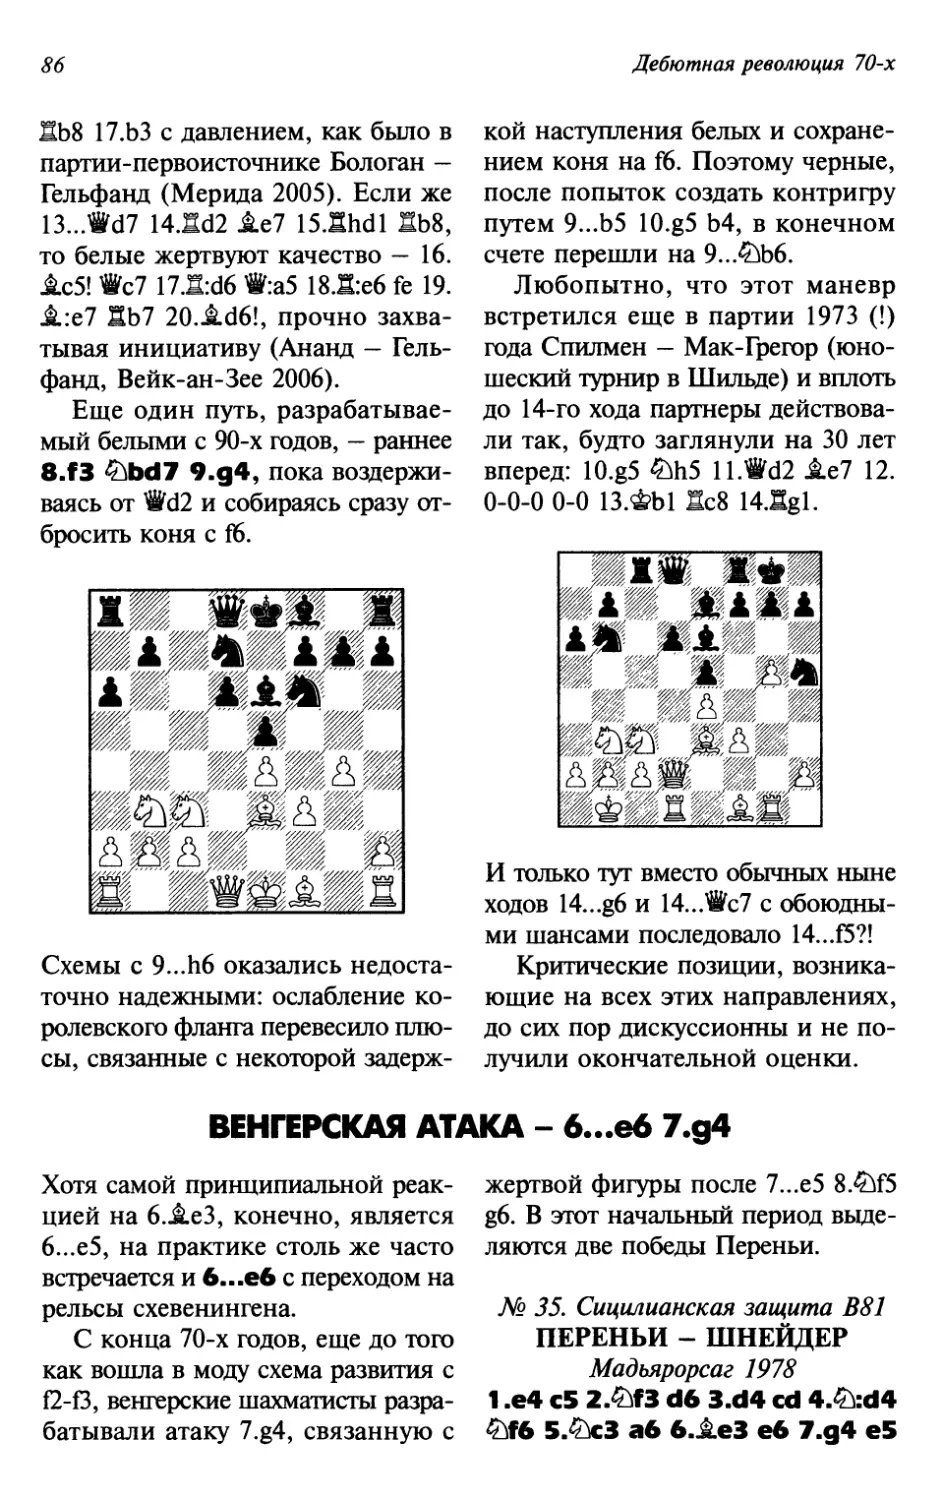 ВЕНГЕРСКАЯ АТАКА - 6...e6 7.g4